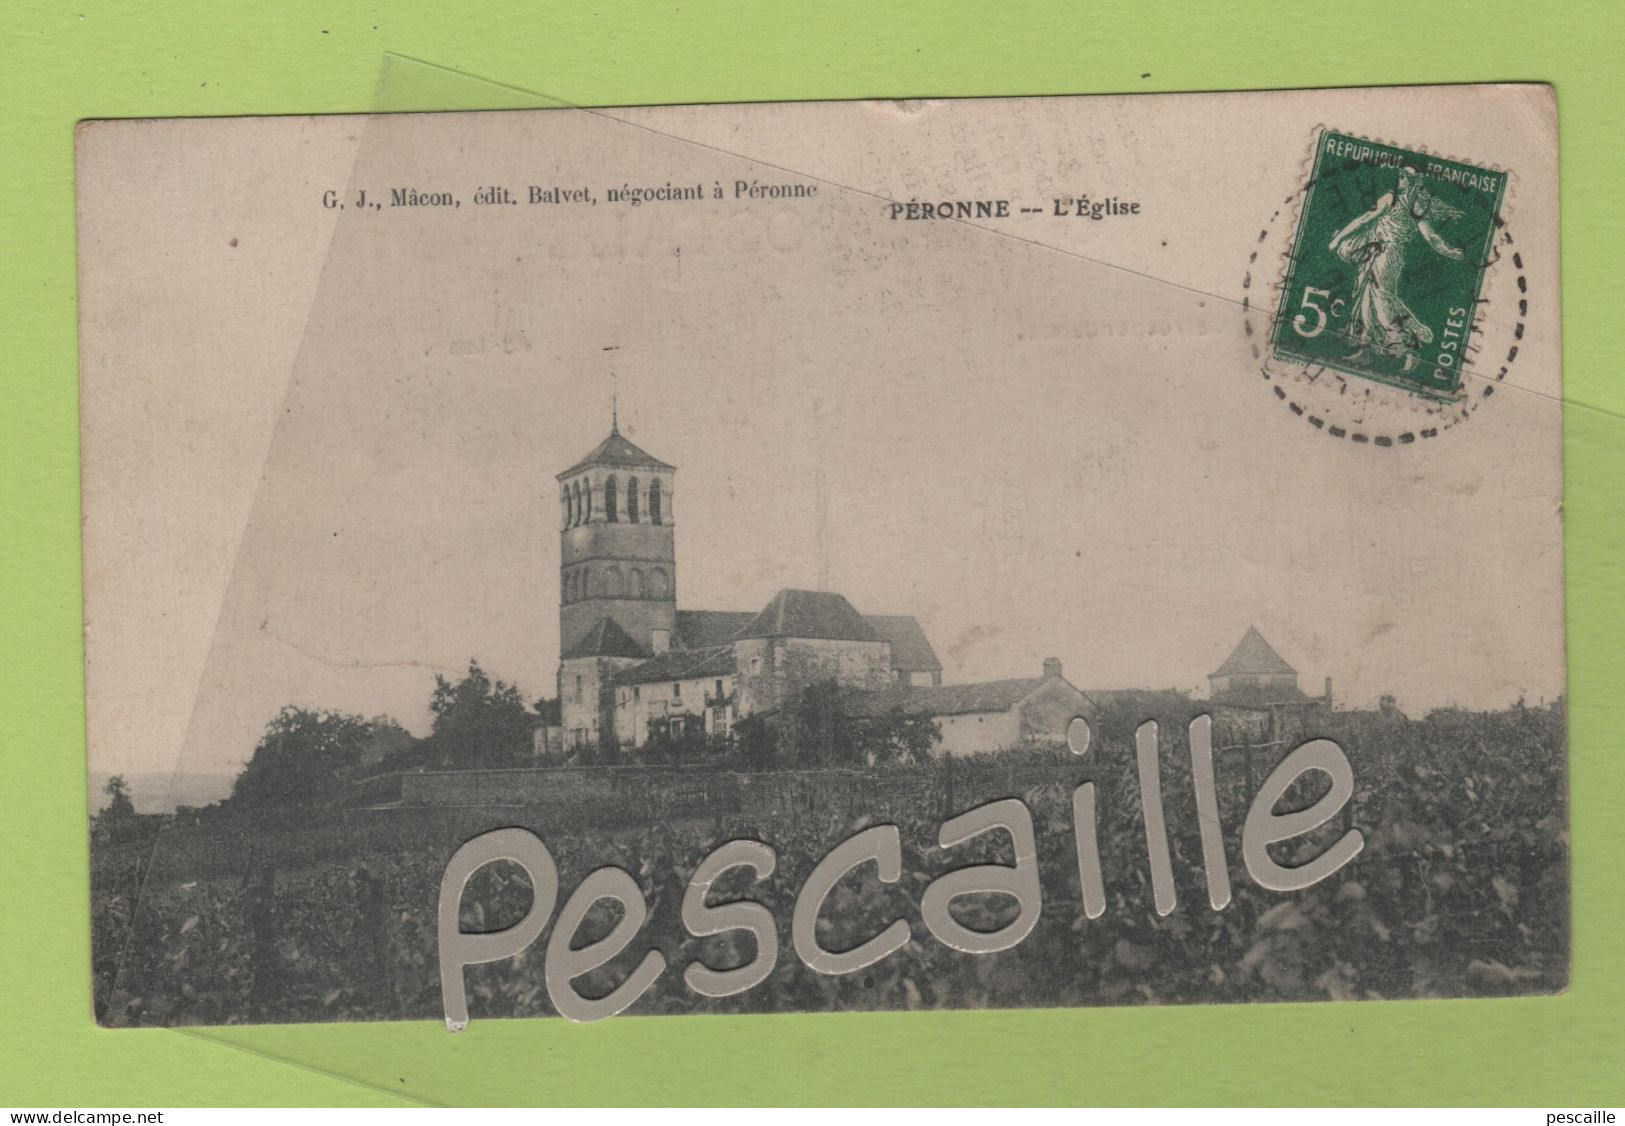 80 SOMME - CP PERONNE - L'EGLISE - G.J. MACON EDIT. BALVET NEGOCIANT A PERONNE - CIRCULEE EN 1913 - Peronne